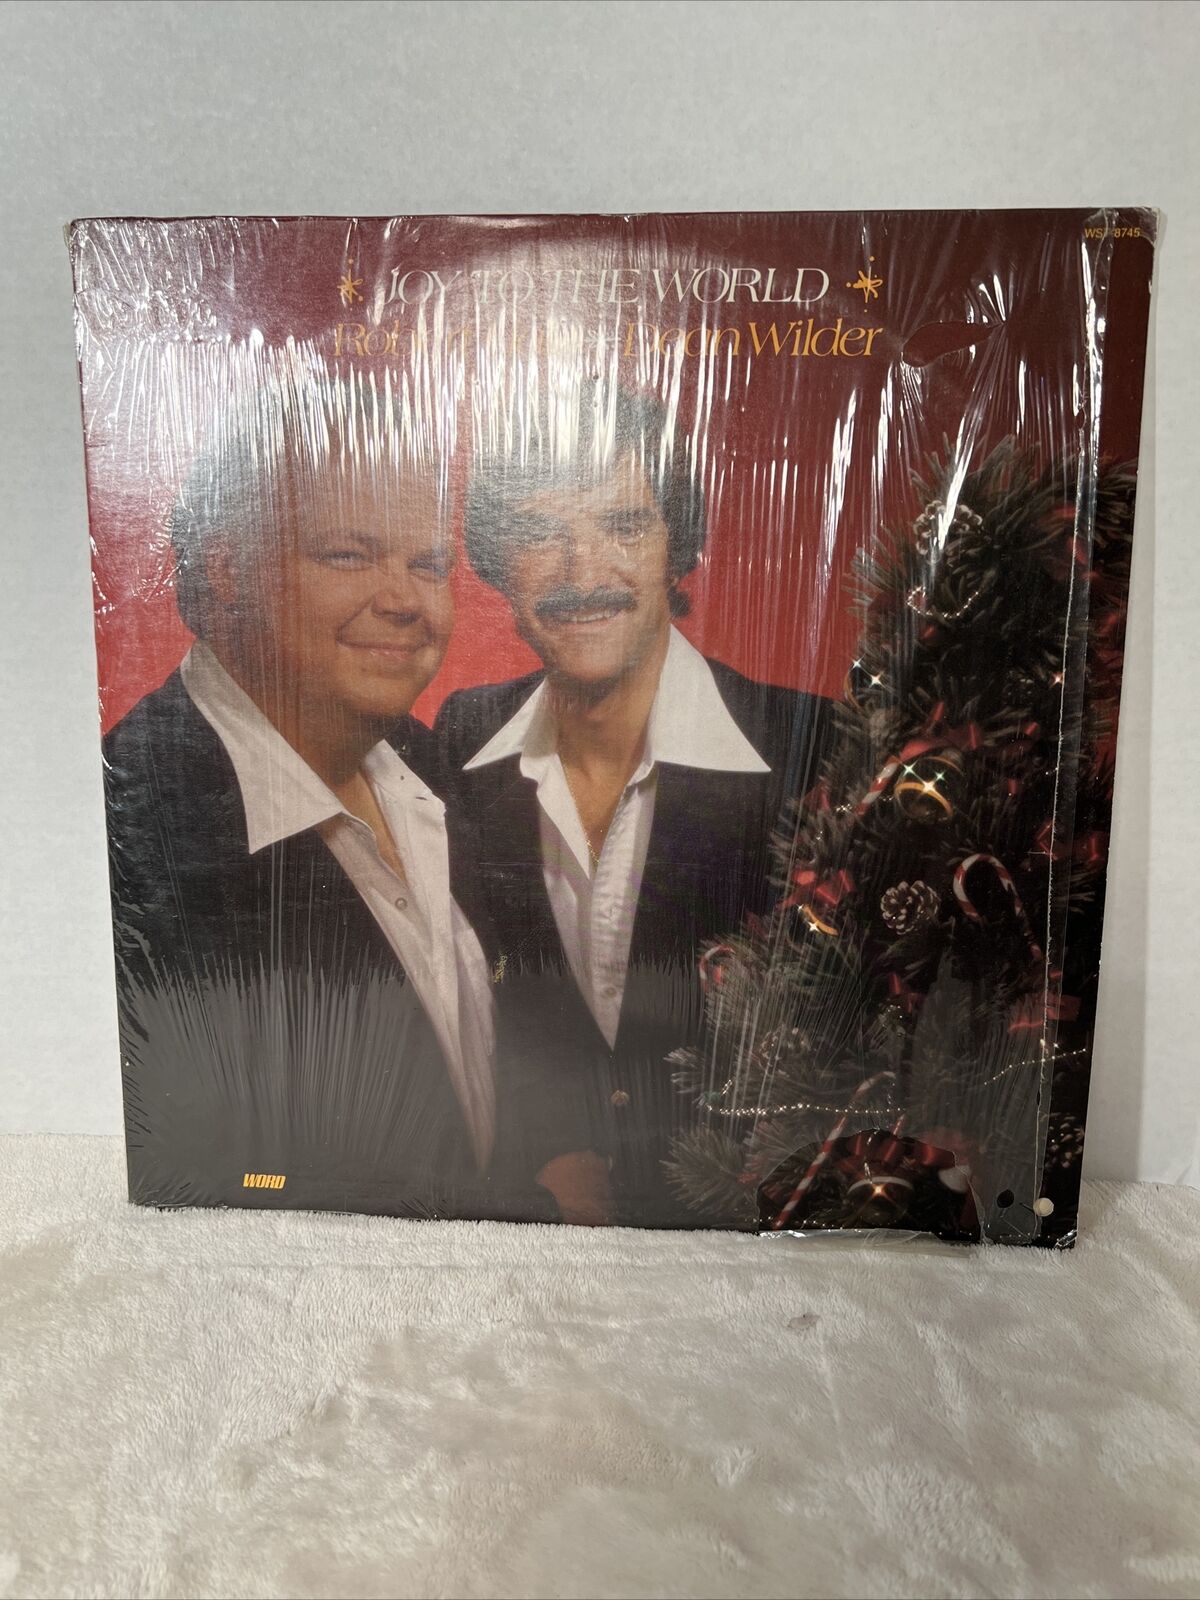 Joy To The World Record Robert Hale & Dean Wilder VTG Word Records 1976 WST-8745